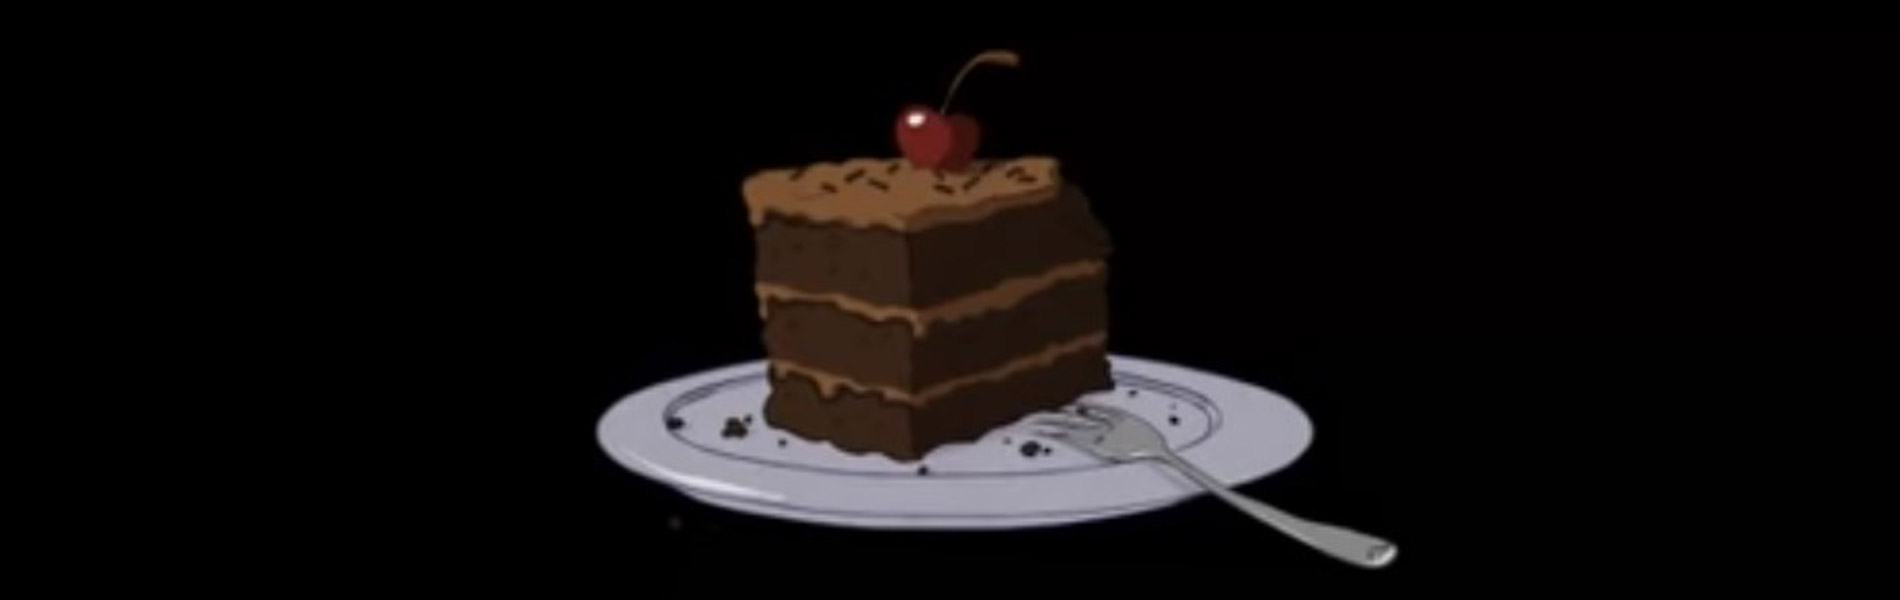 Insomnia Radio: Nic Cage Wants Cake